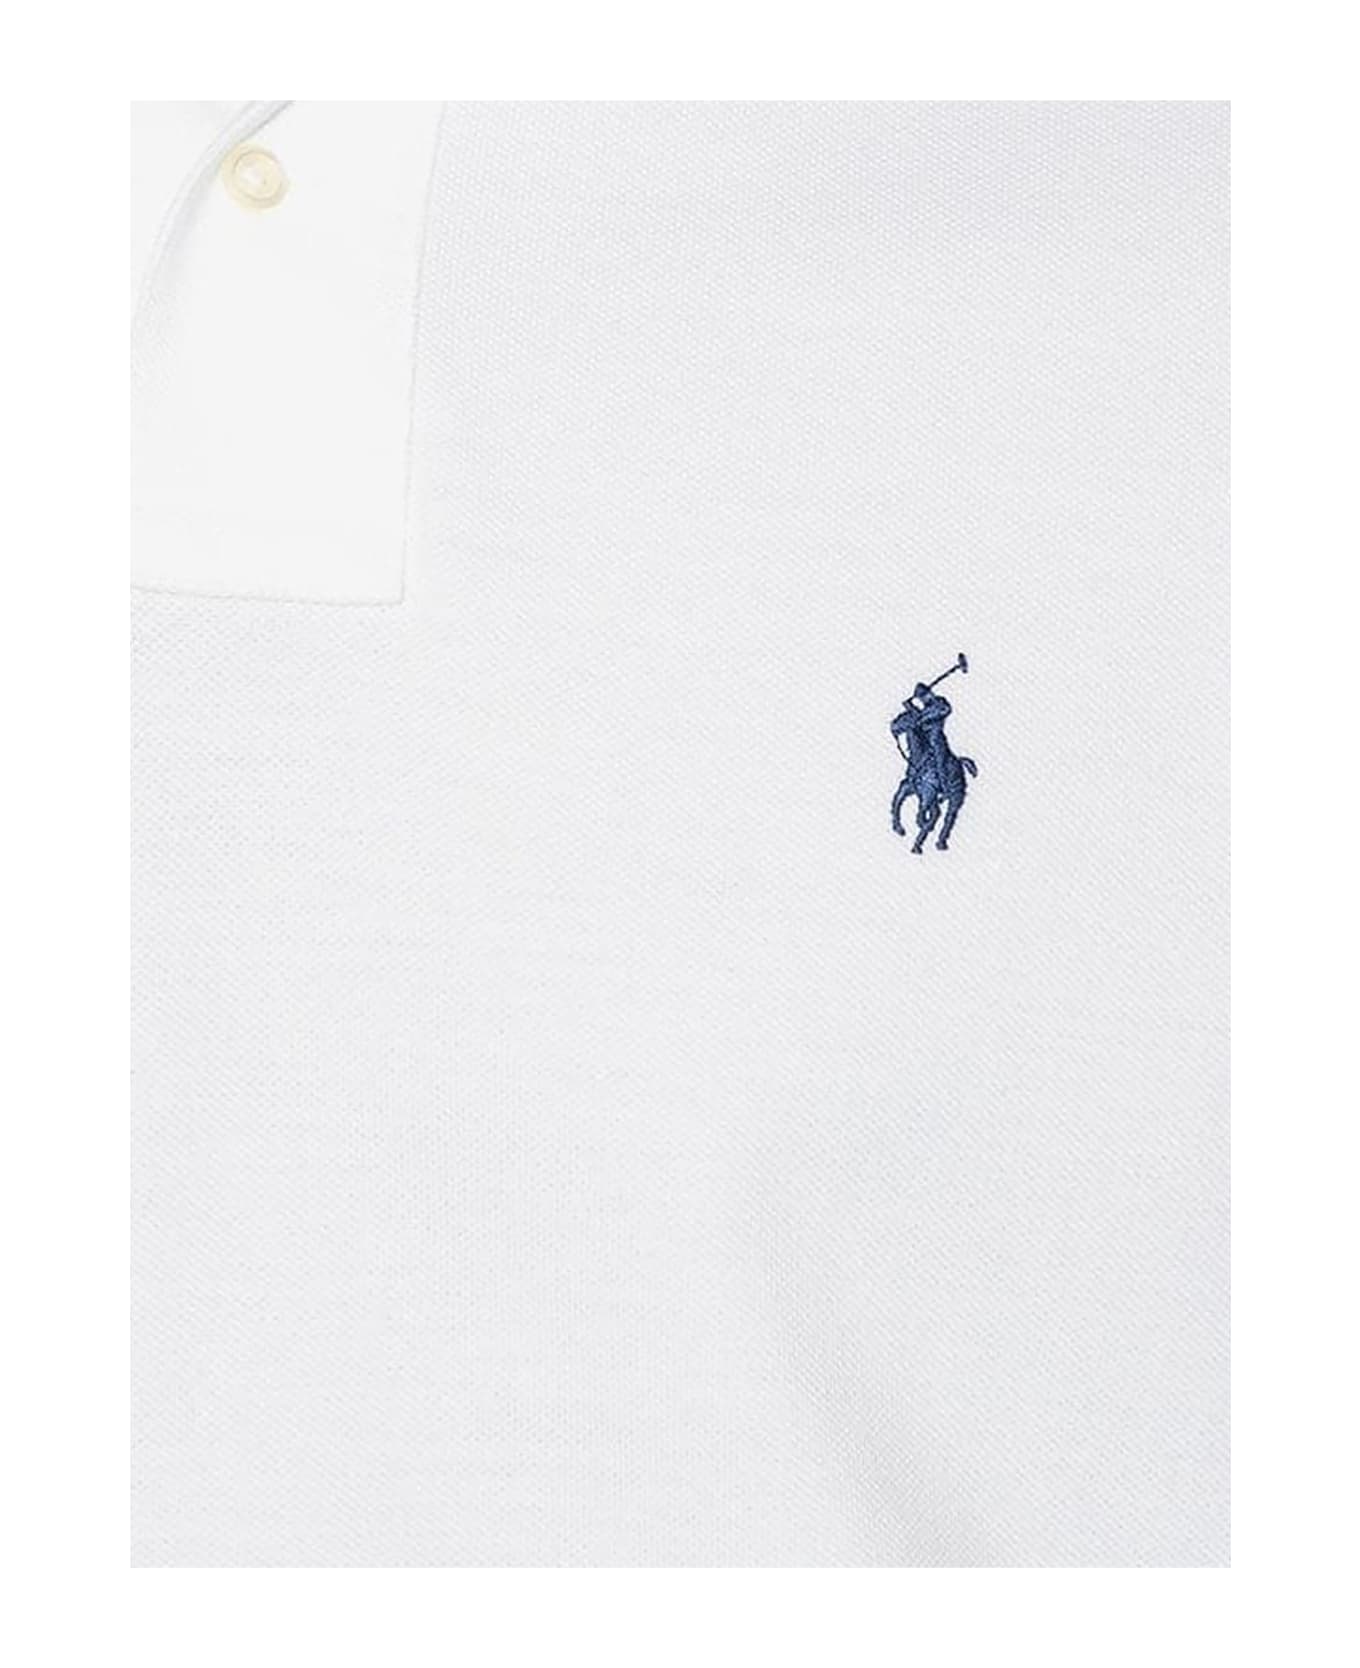 Ralph Lauren White Cotton Polo Shirt - 002